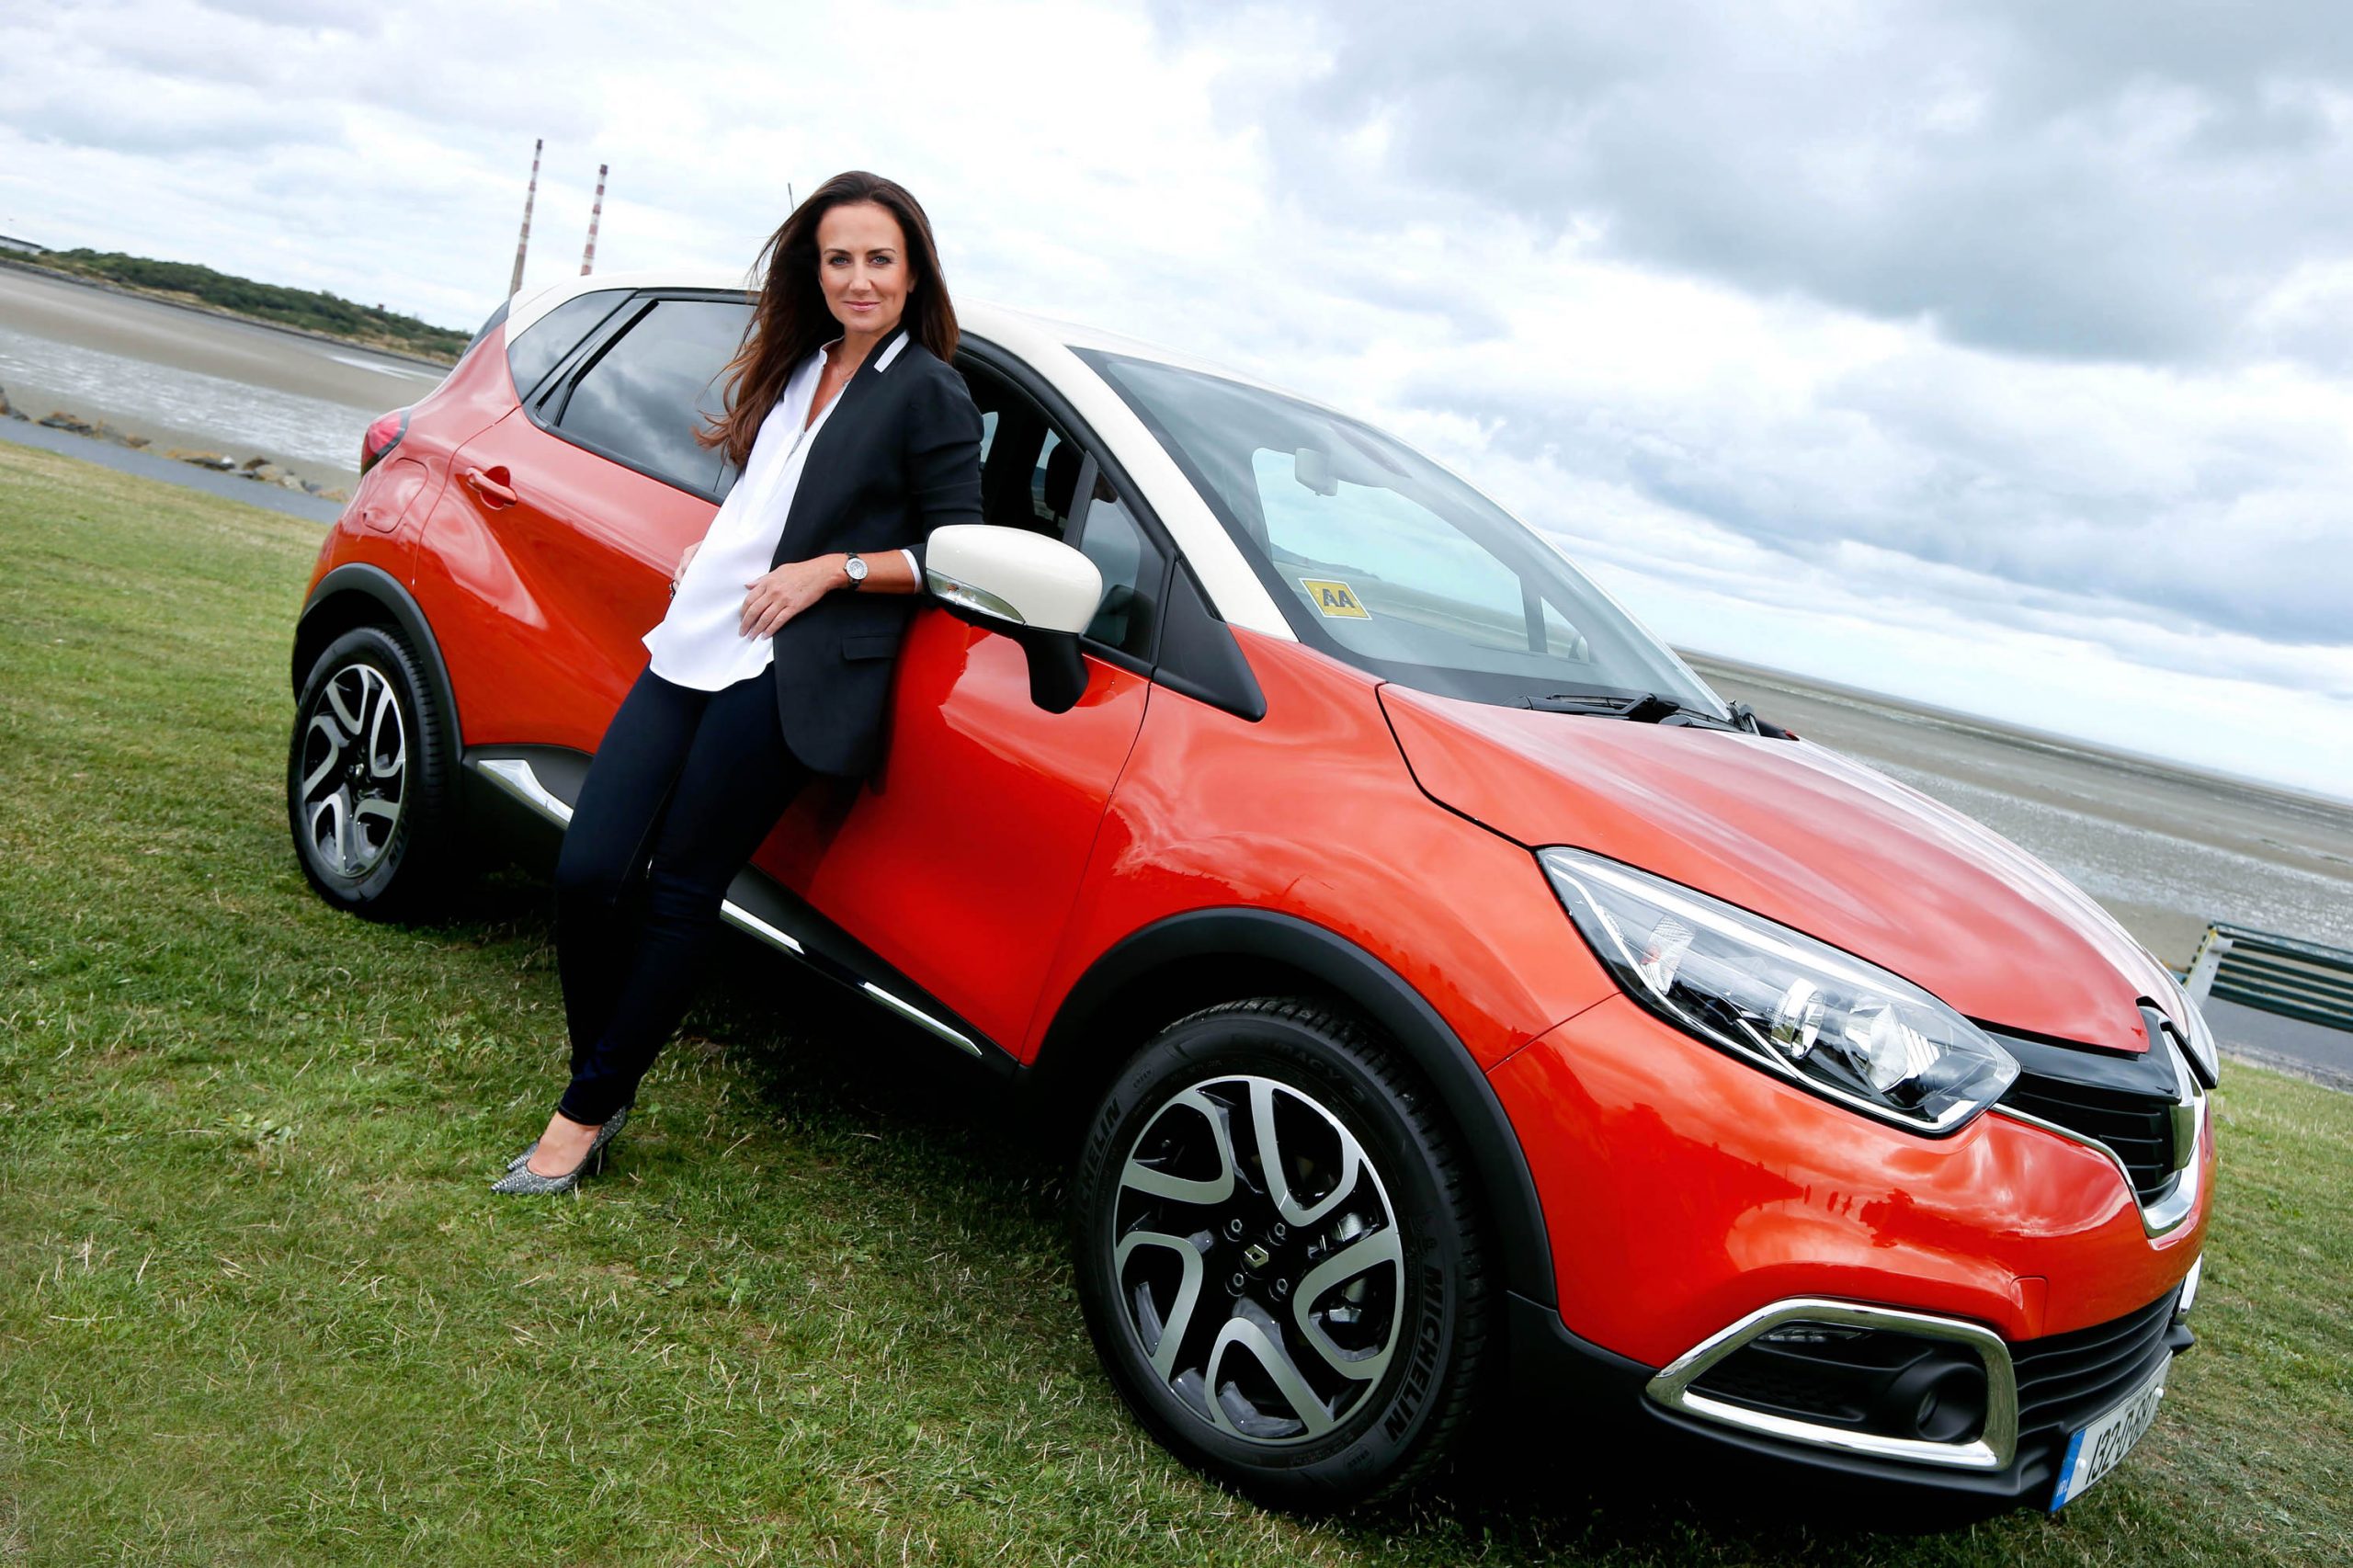 Renault announce Lorraine Keane as Brand Ambassador